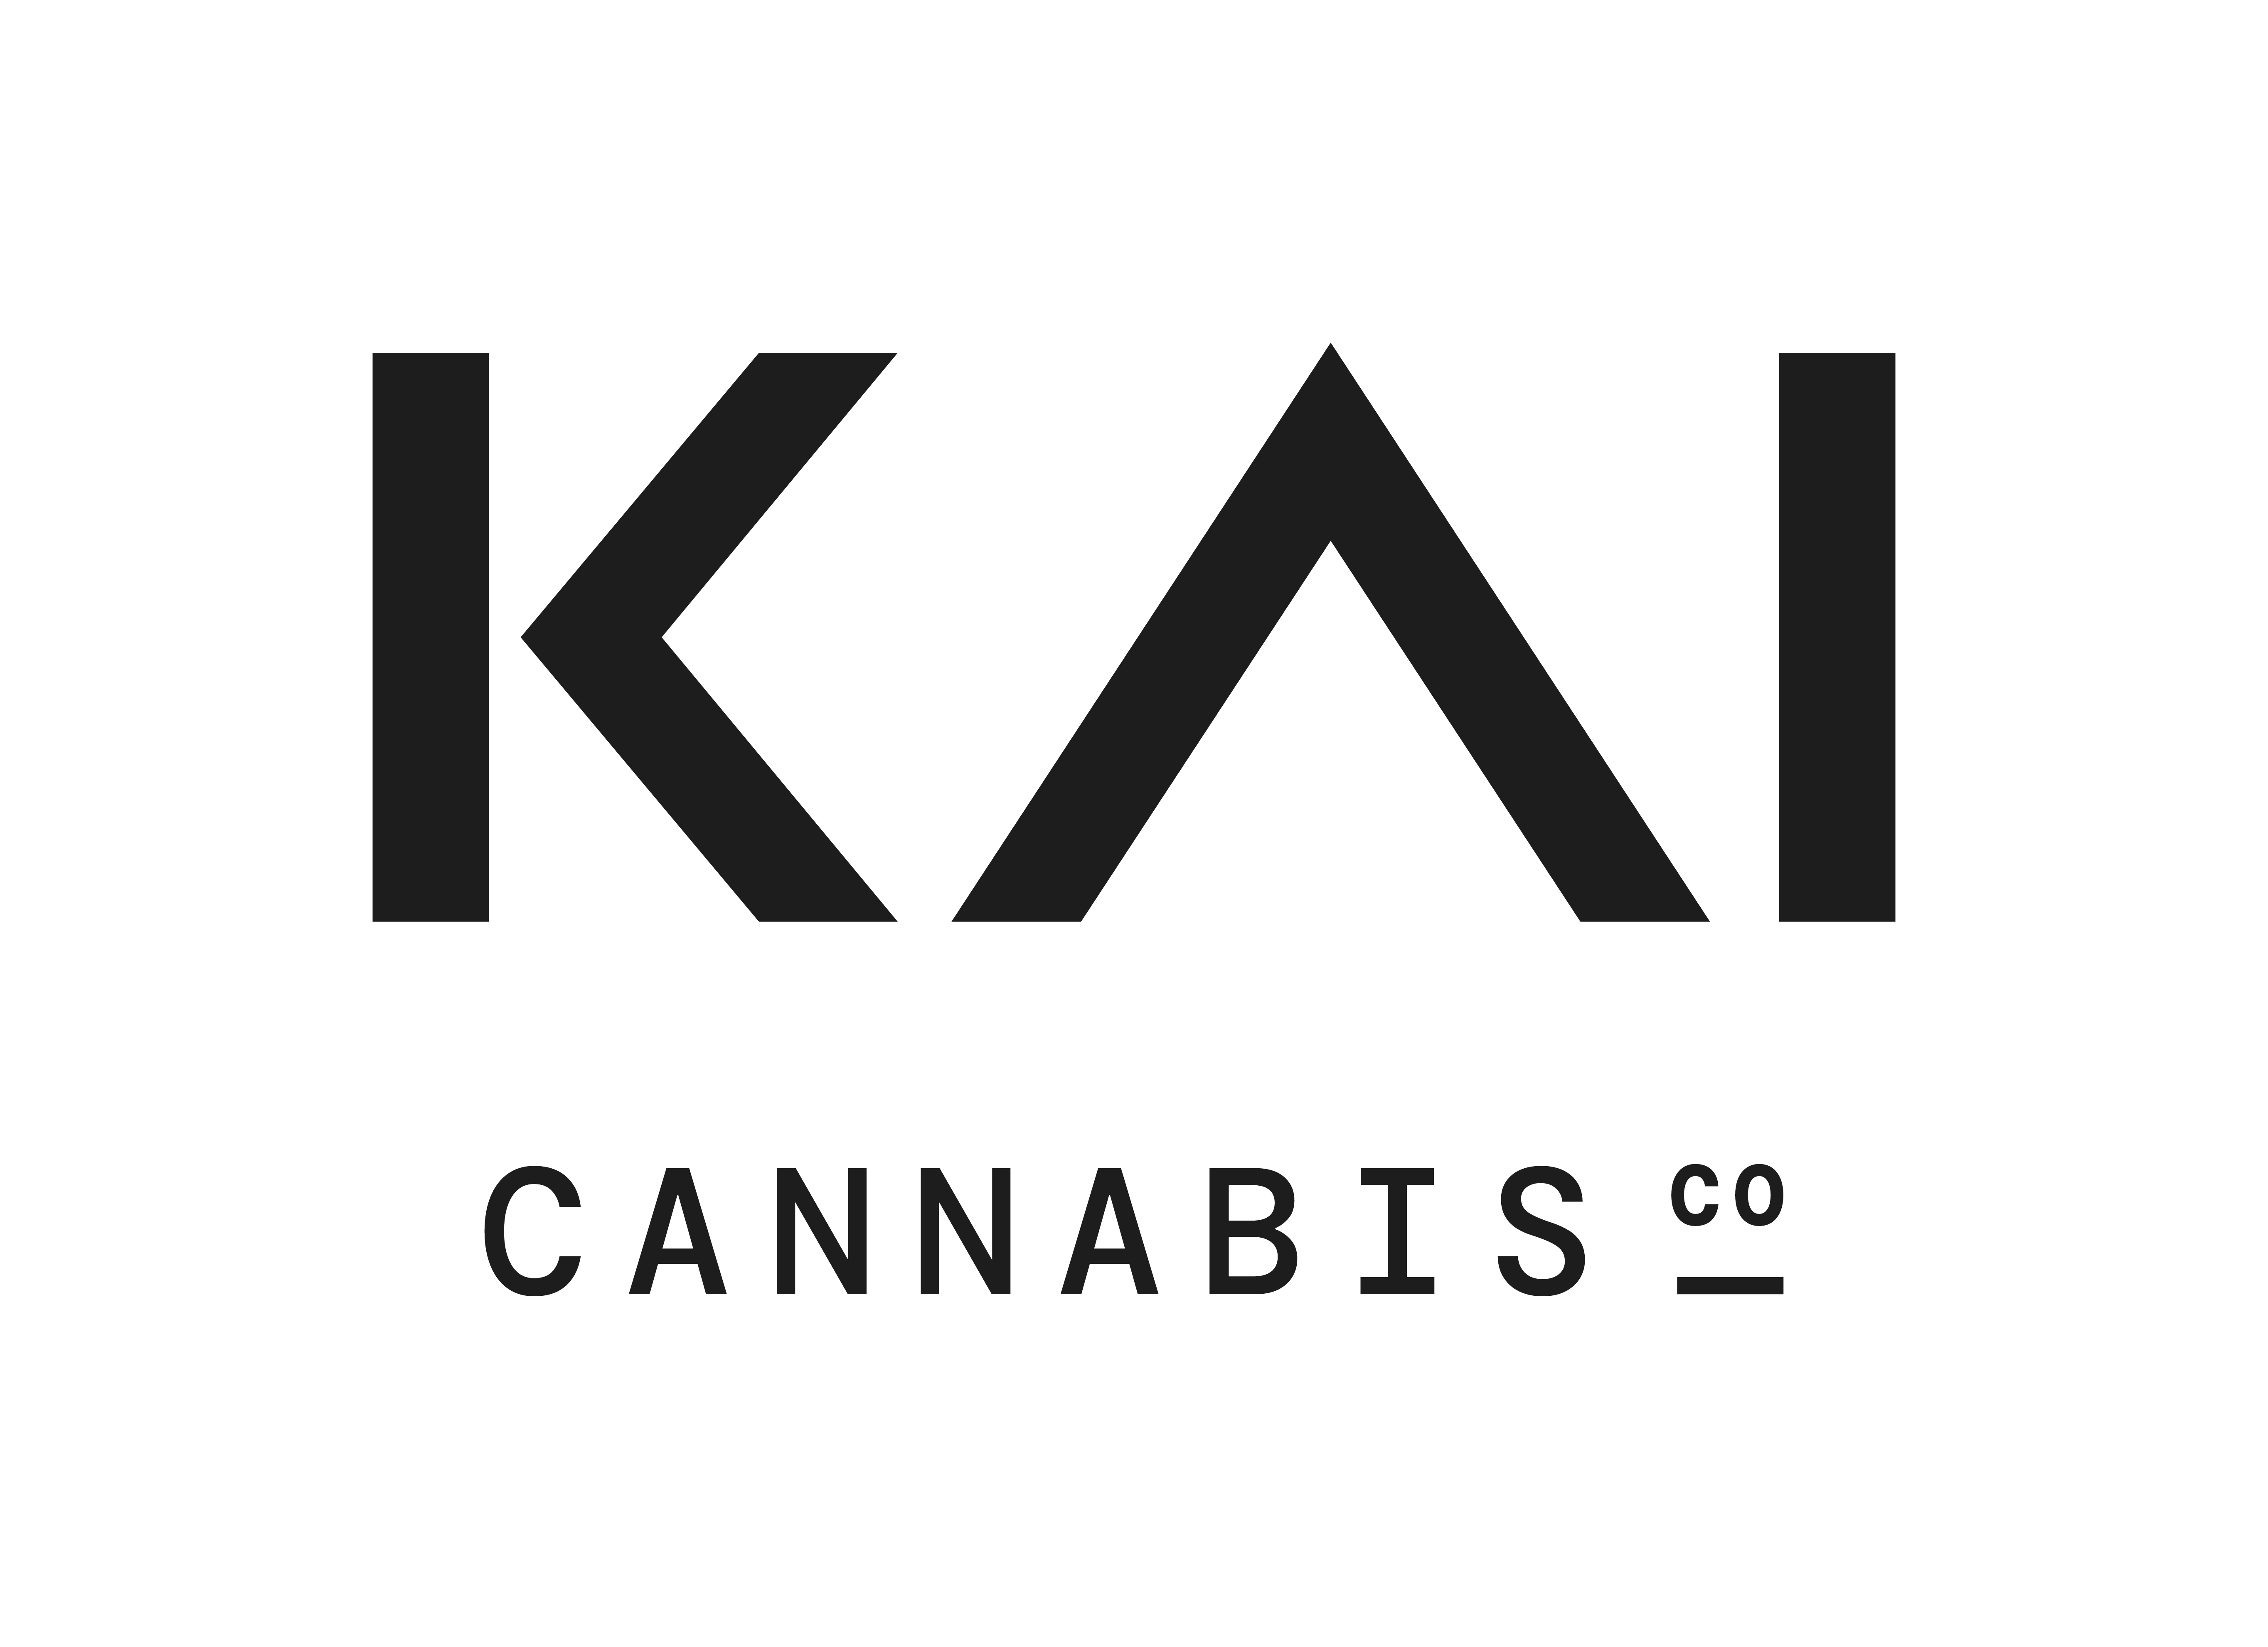 CannaBash Cannabis Co.